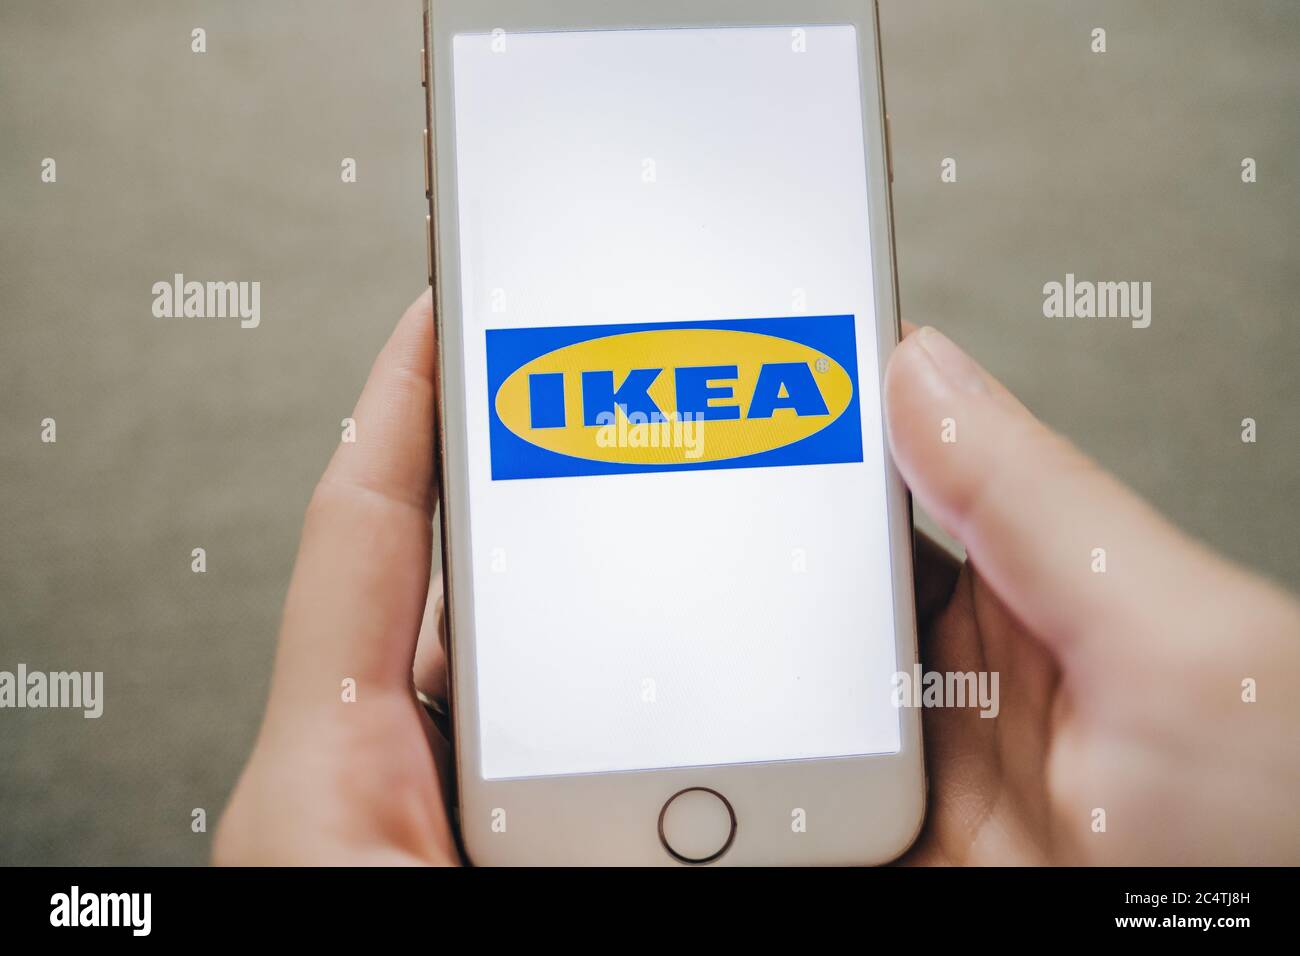 IKEA on the smartphone Stock Photo - Alamy